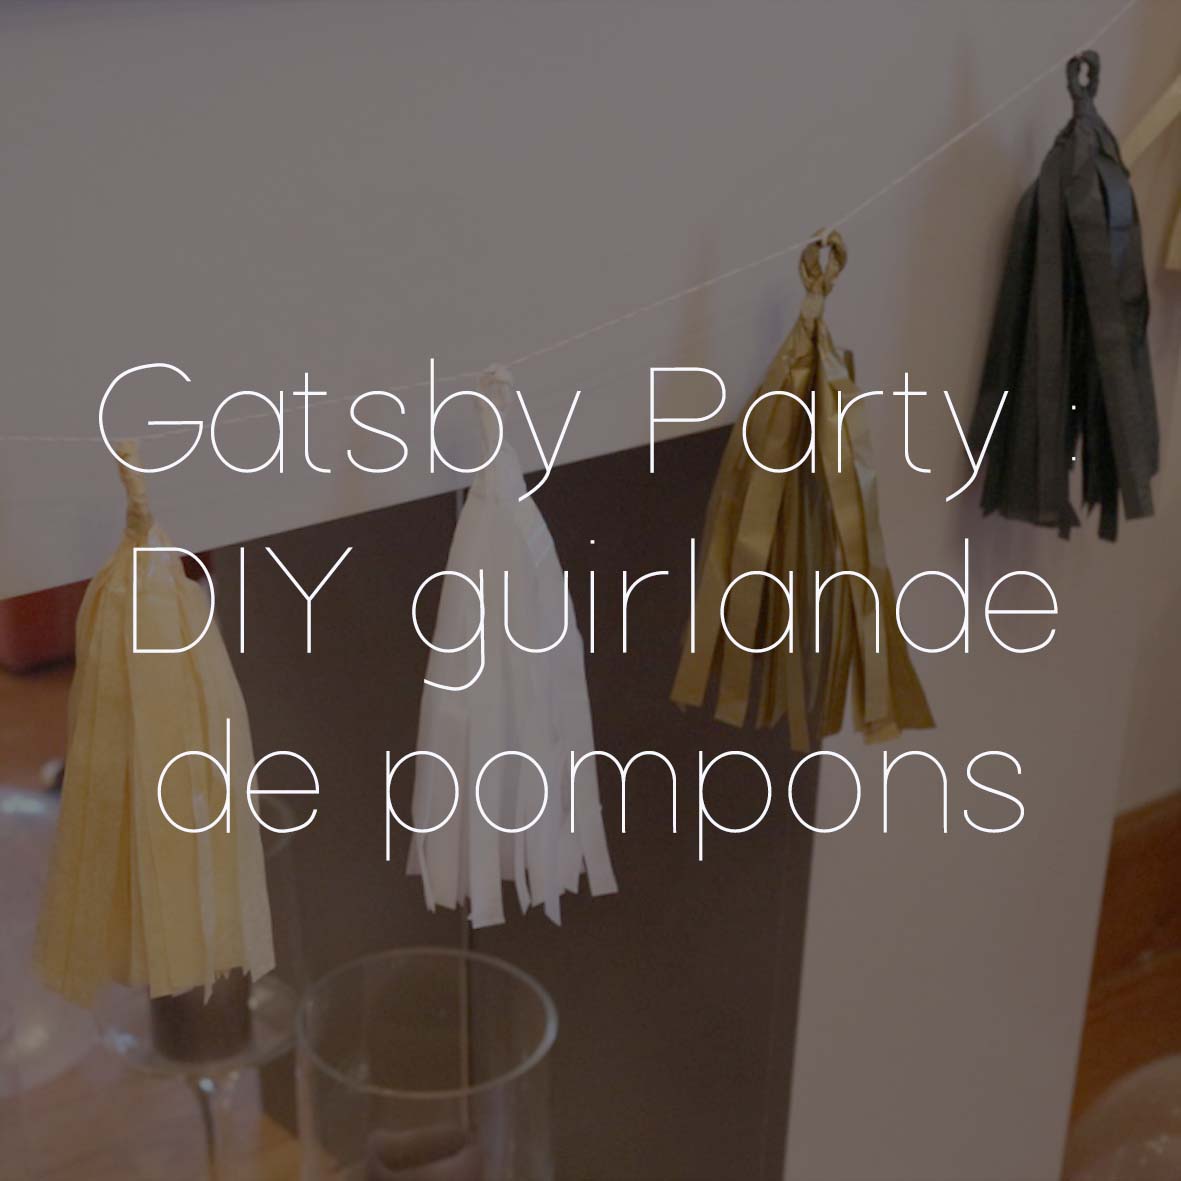 40 GATSBY PARTY DIY GUIRLANDE POMPONS